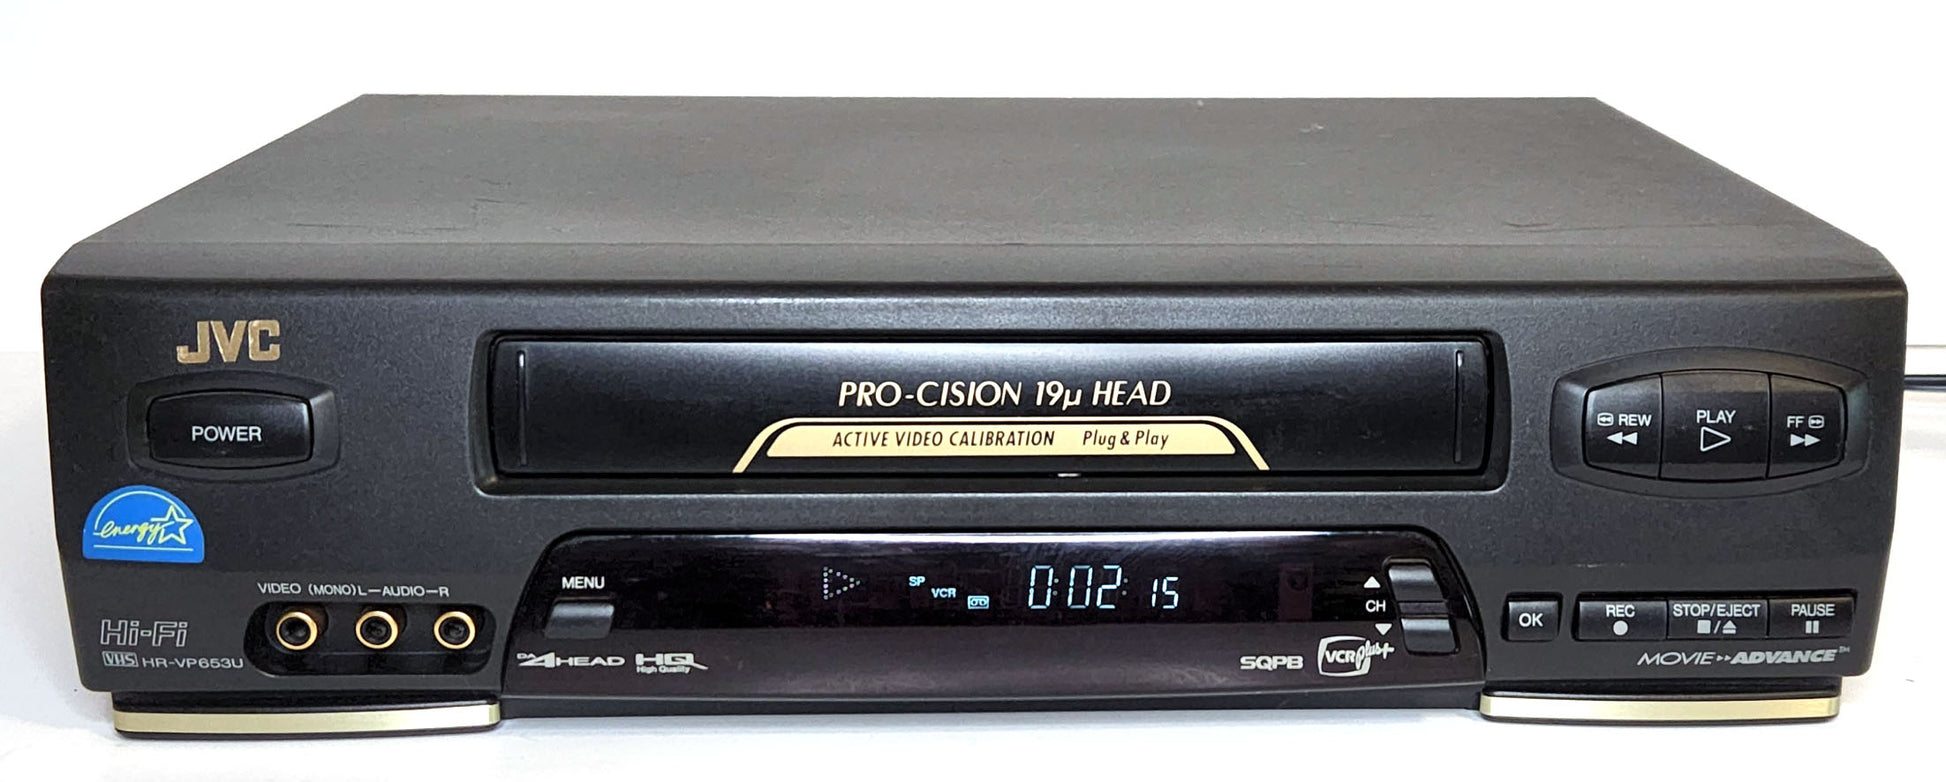 JVC HR-VP653U VCR, 4-Head Hi-Fi Stereo - Front